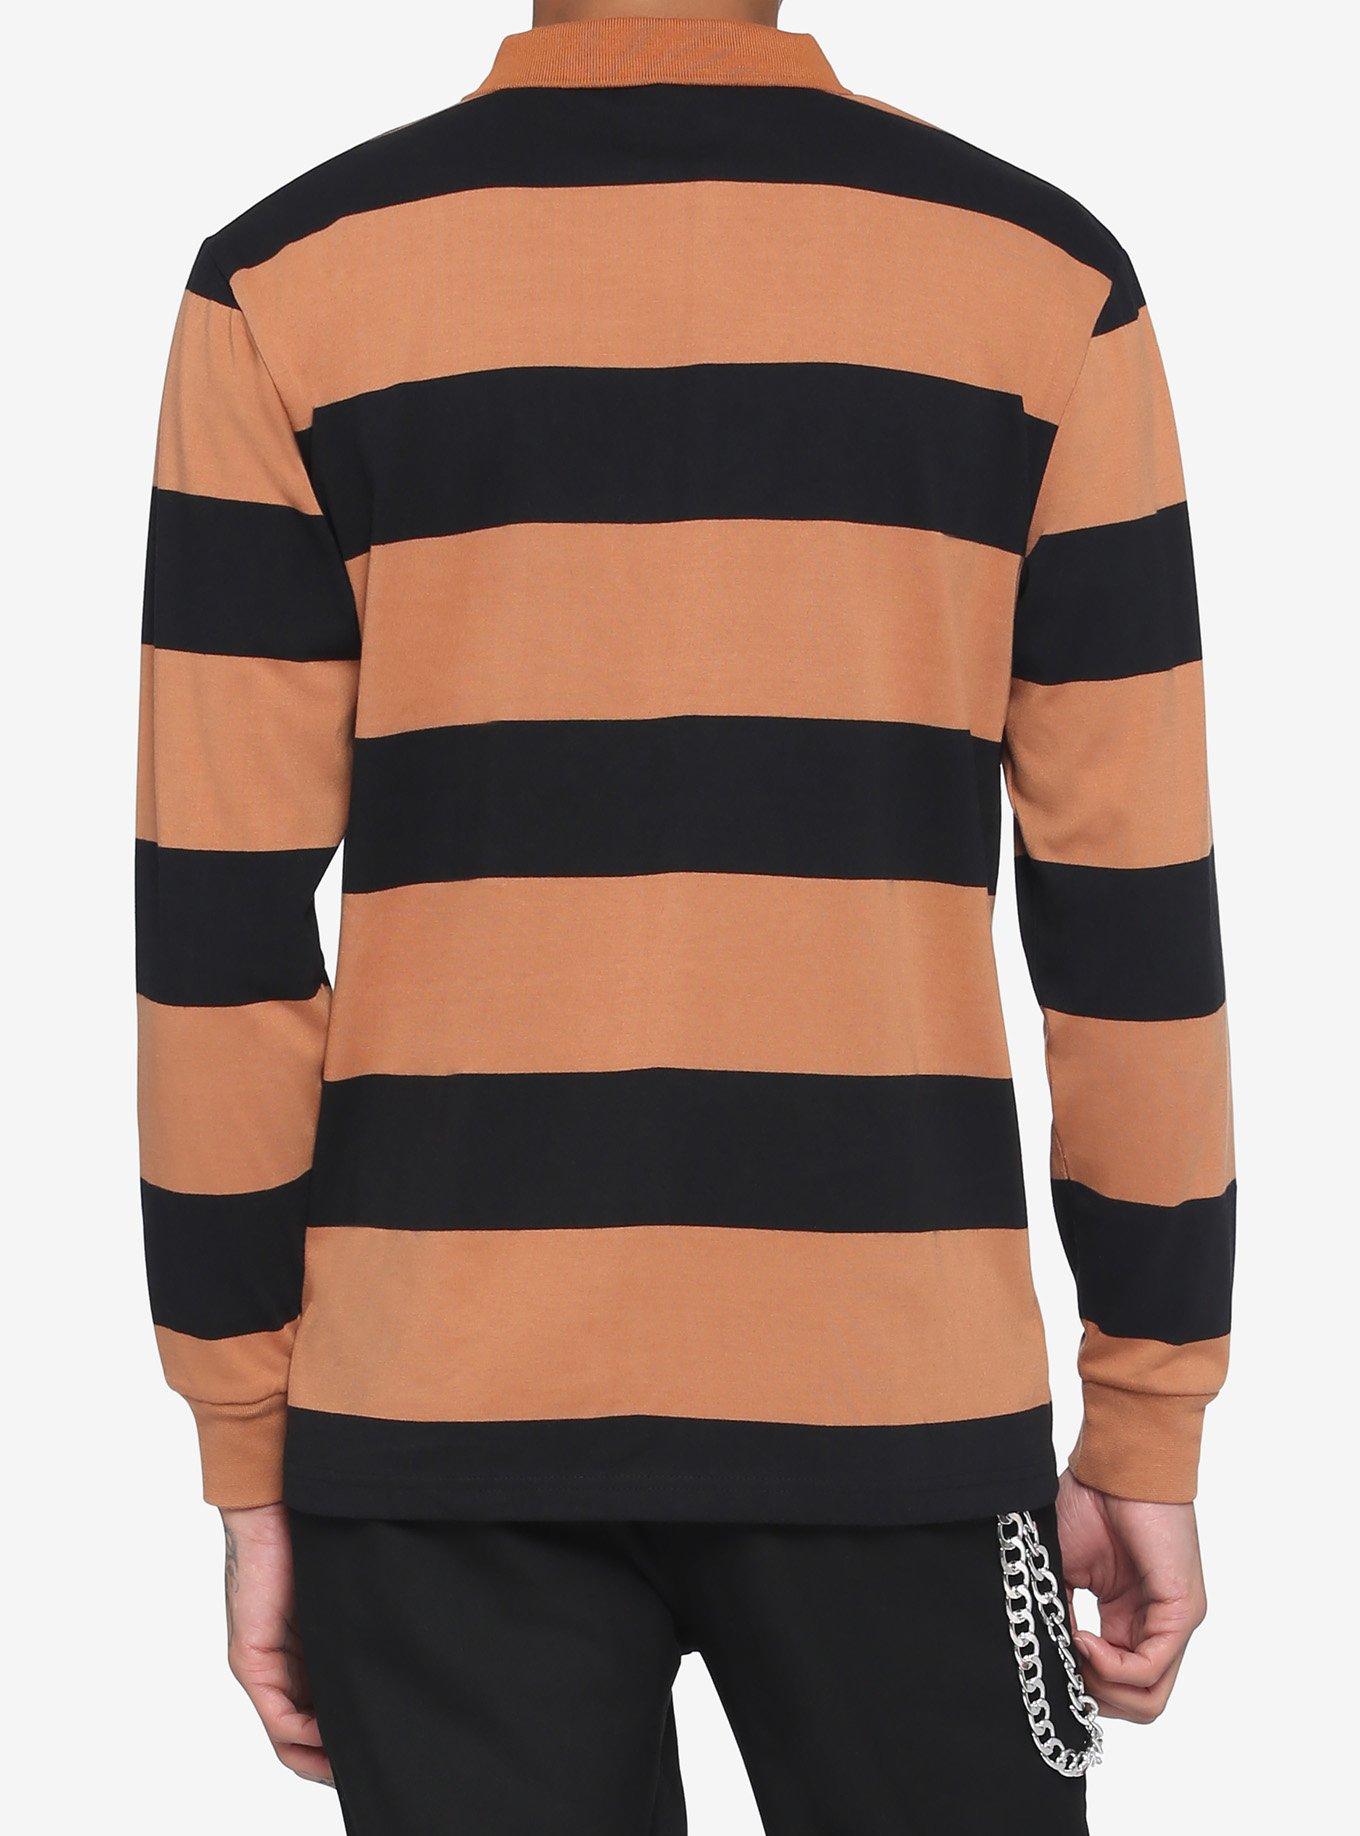 Black & Brown Wide Stripe Long-Sleeve Polo Shirt, STRIPE - TAN, alternate